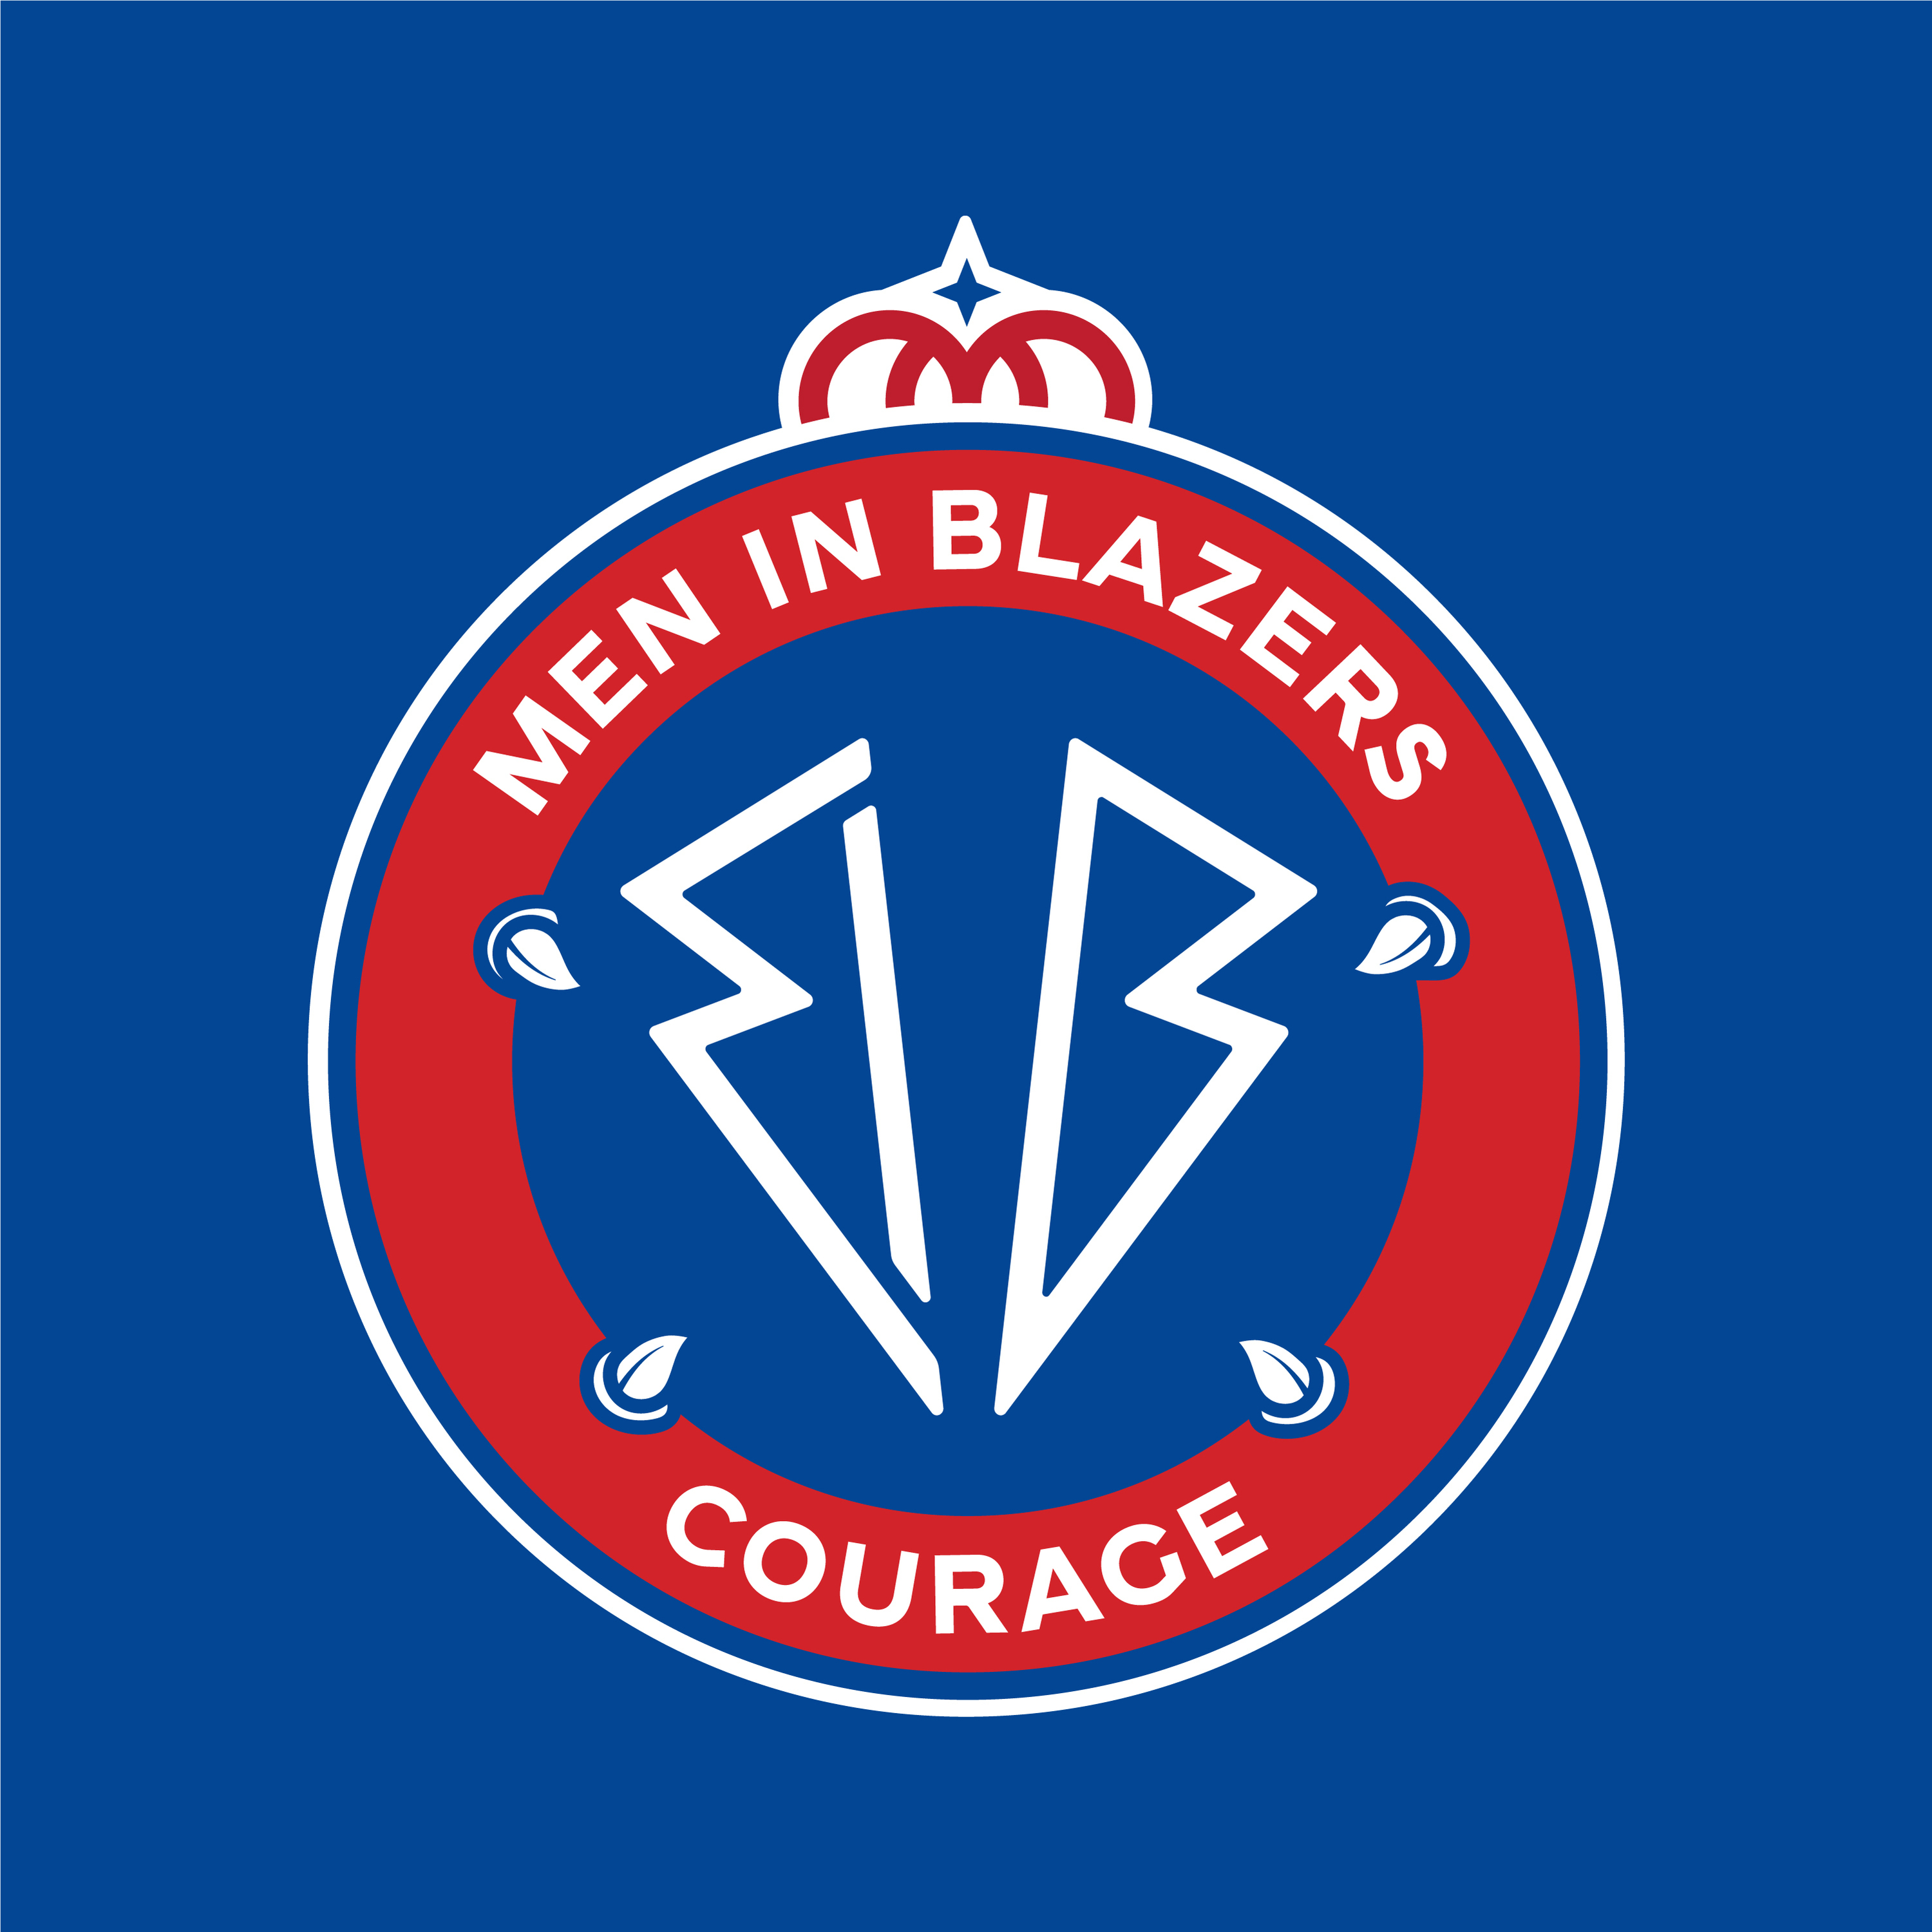 Men in Blazers World Cup Preview, Presented by Camarena Tequlia: Episode 4